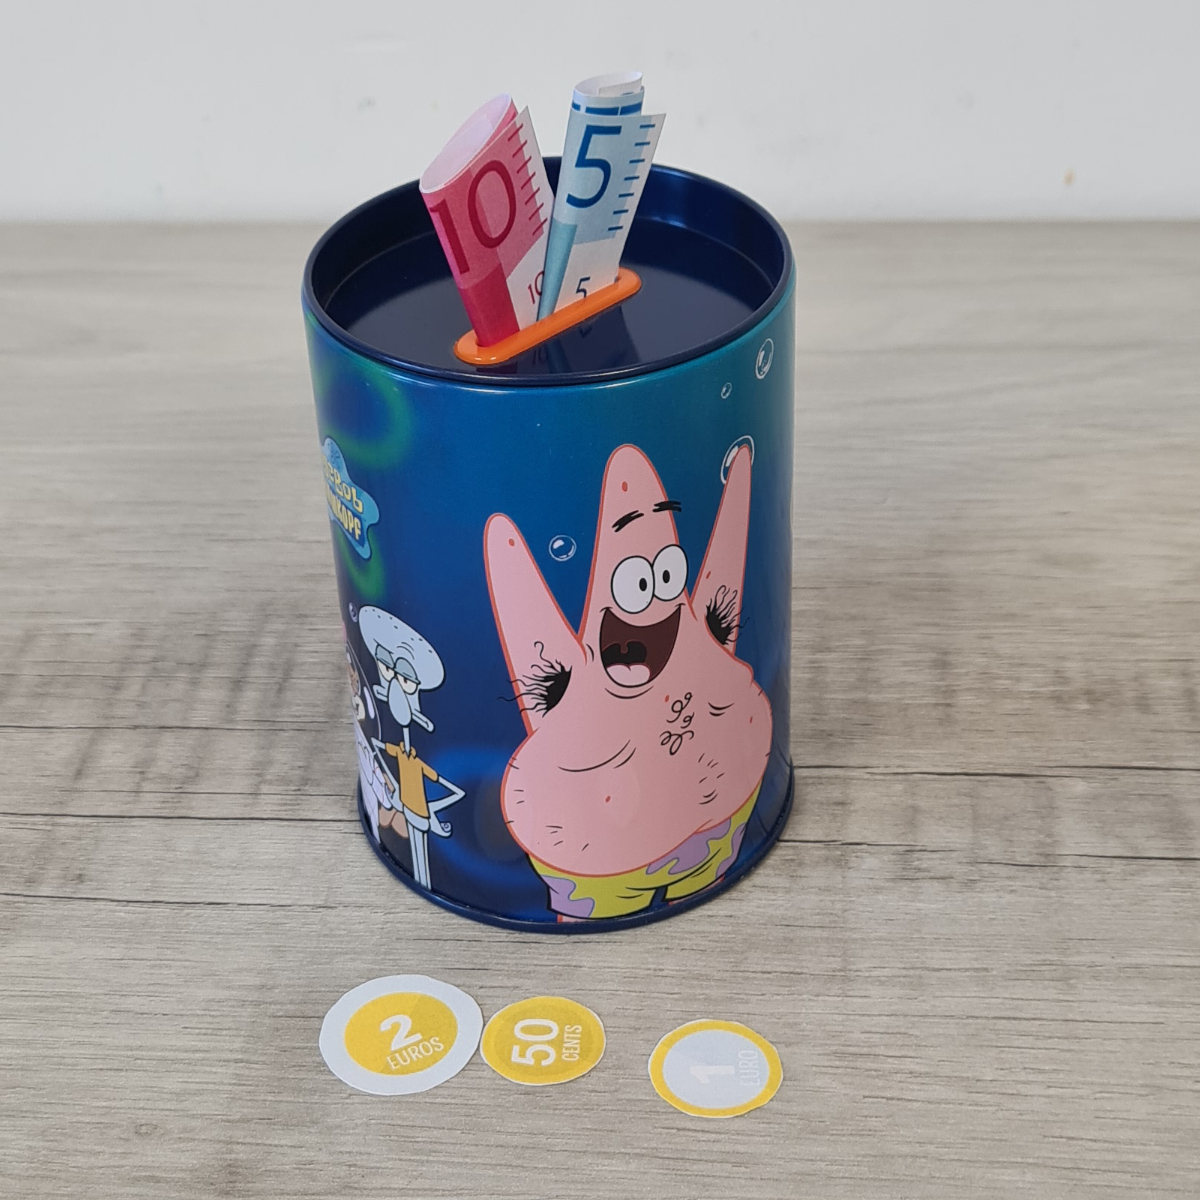 SpongeBob metal money box